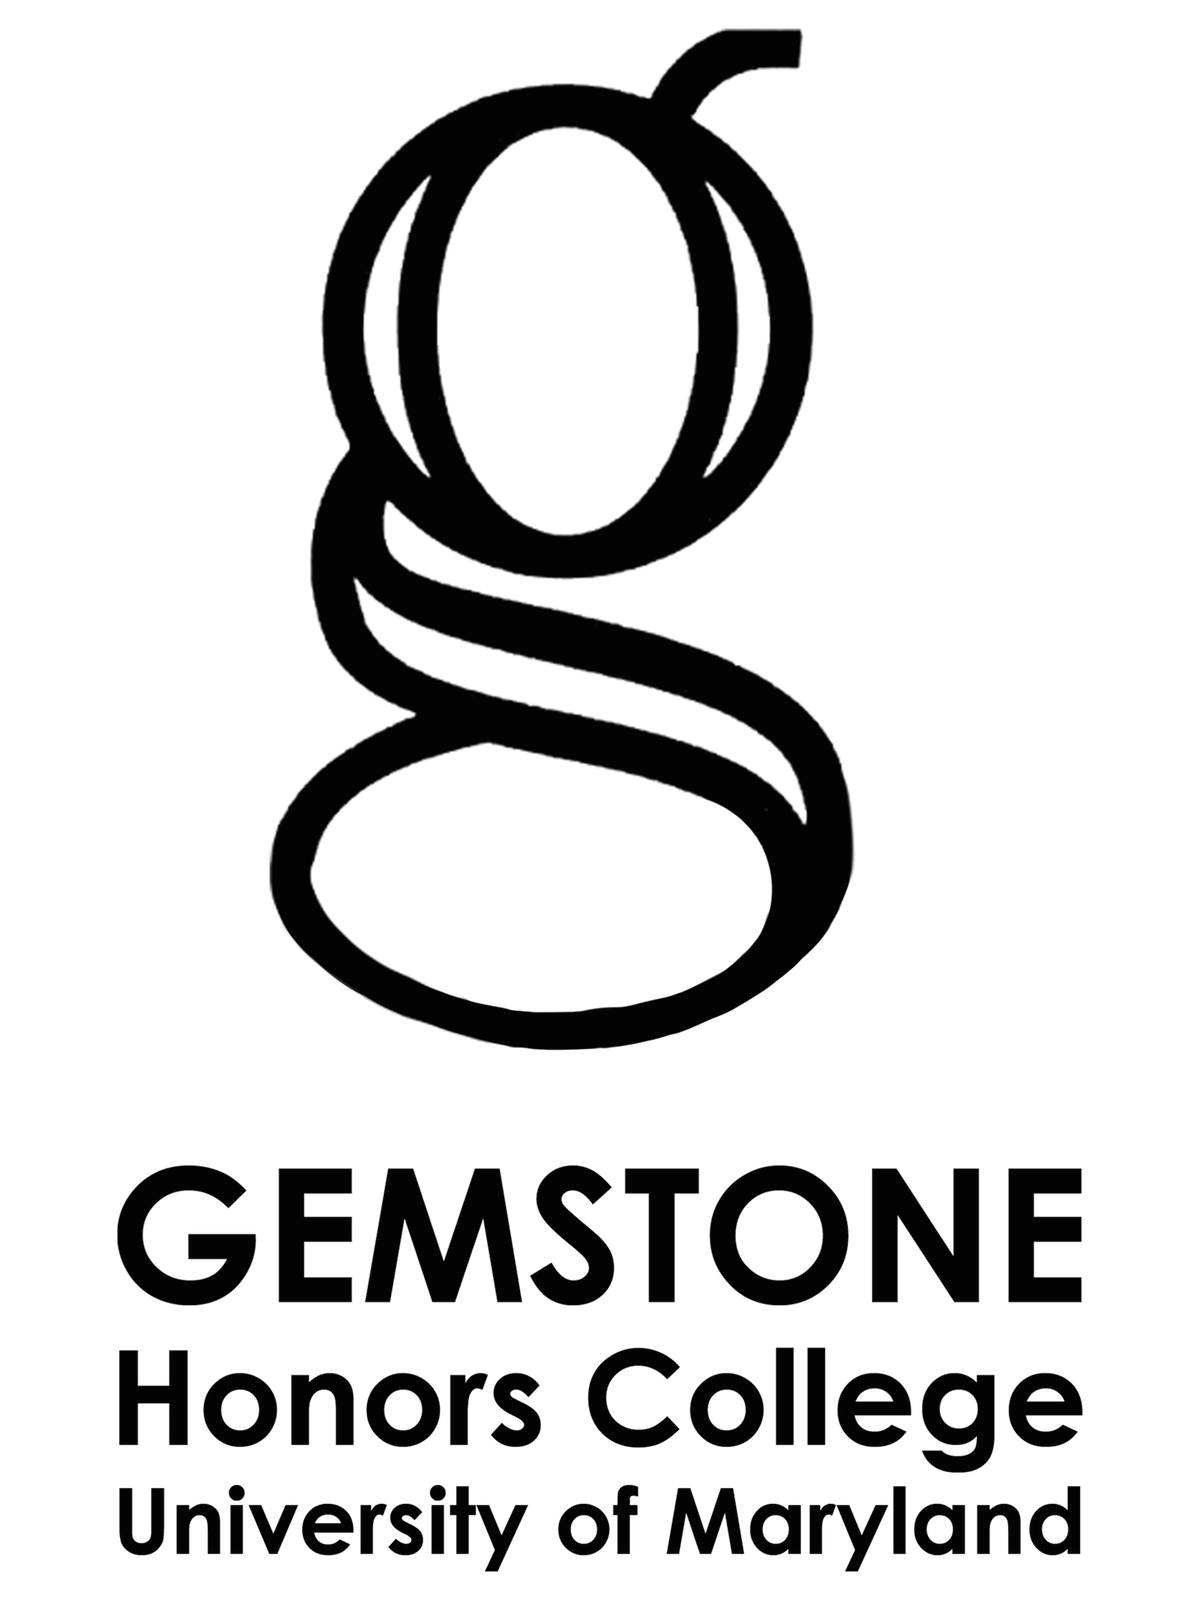 The Gemstone Honors Program